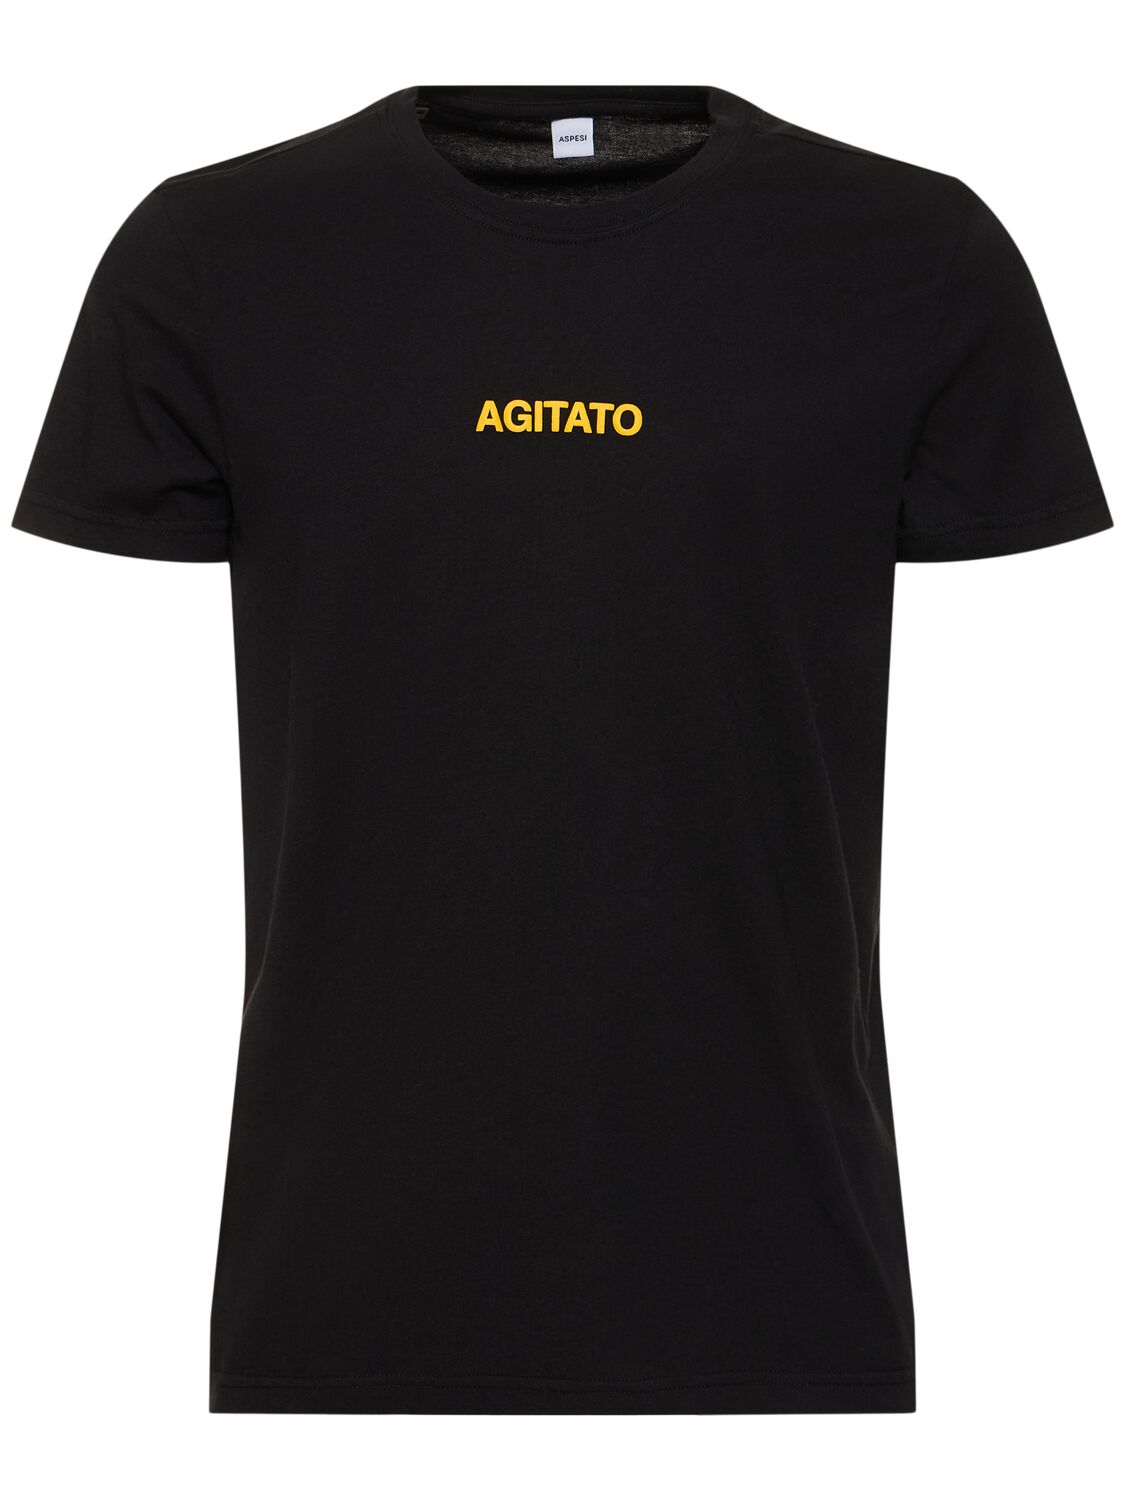 Image of Agitato Print Cotton Jersey T-shirt